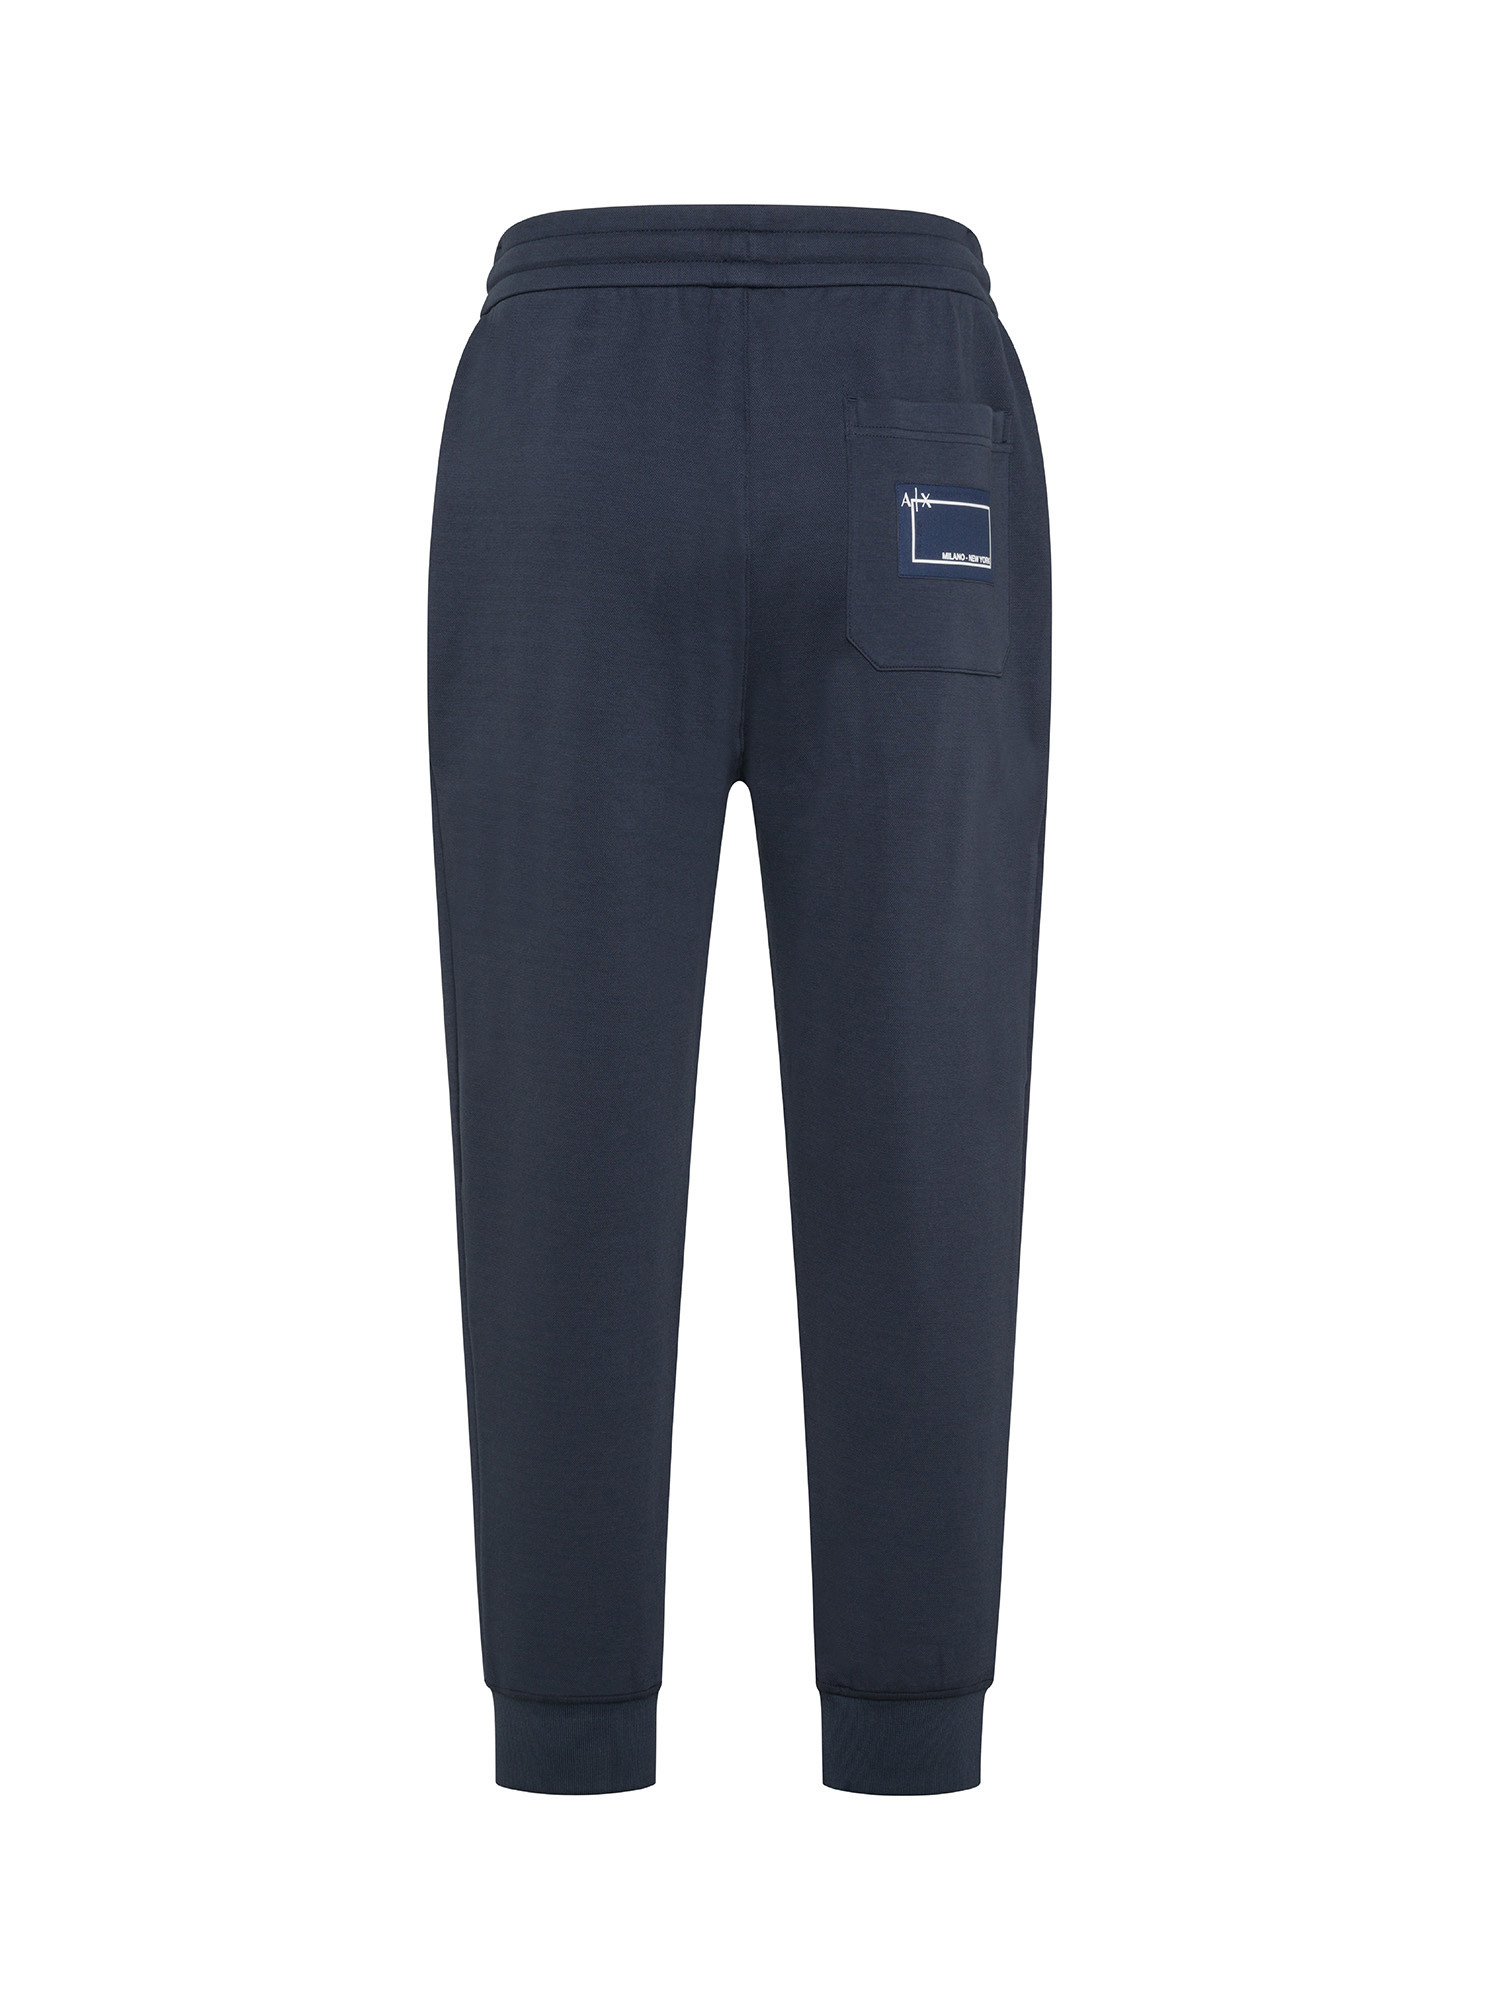 Armani Exchange - Pantaloni sportivi in felpa, Blu scuro, large image number 1